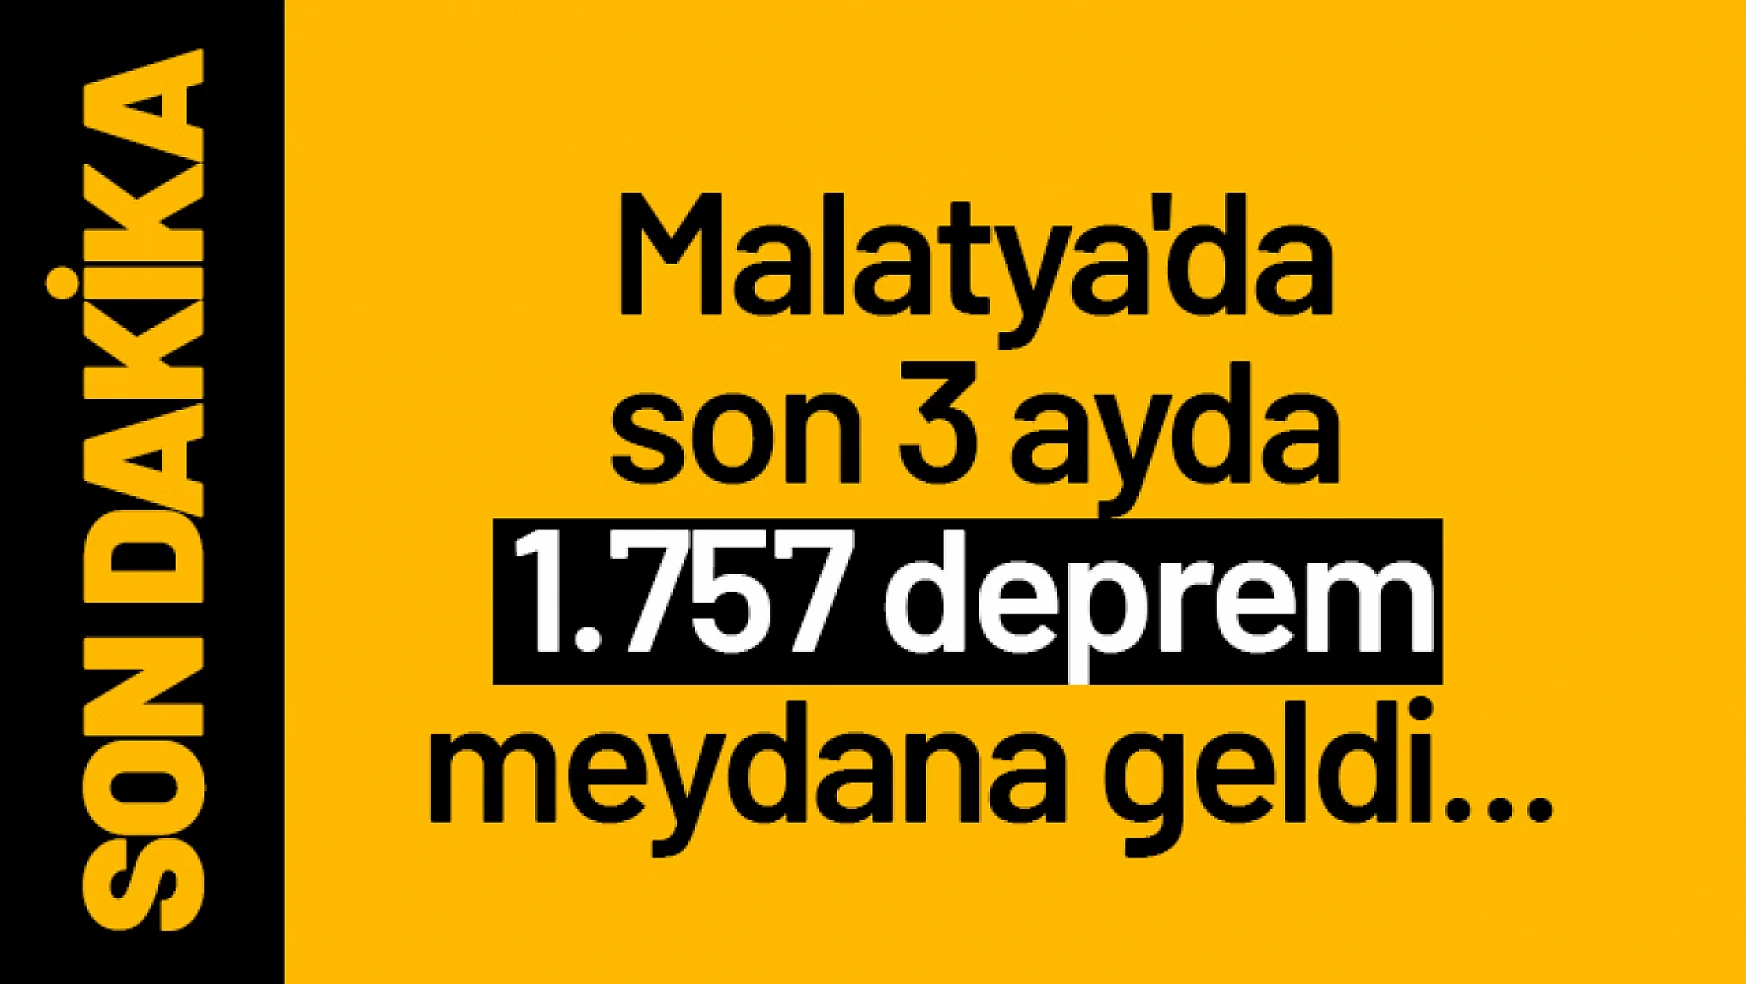 Malatya'da son 3 ayda 1.757 deprem meydana geldi...